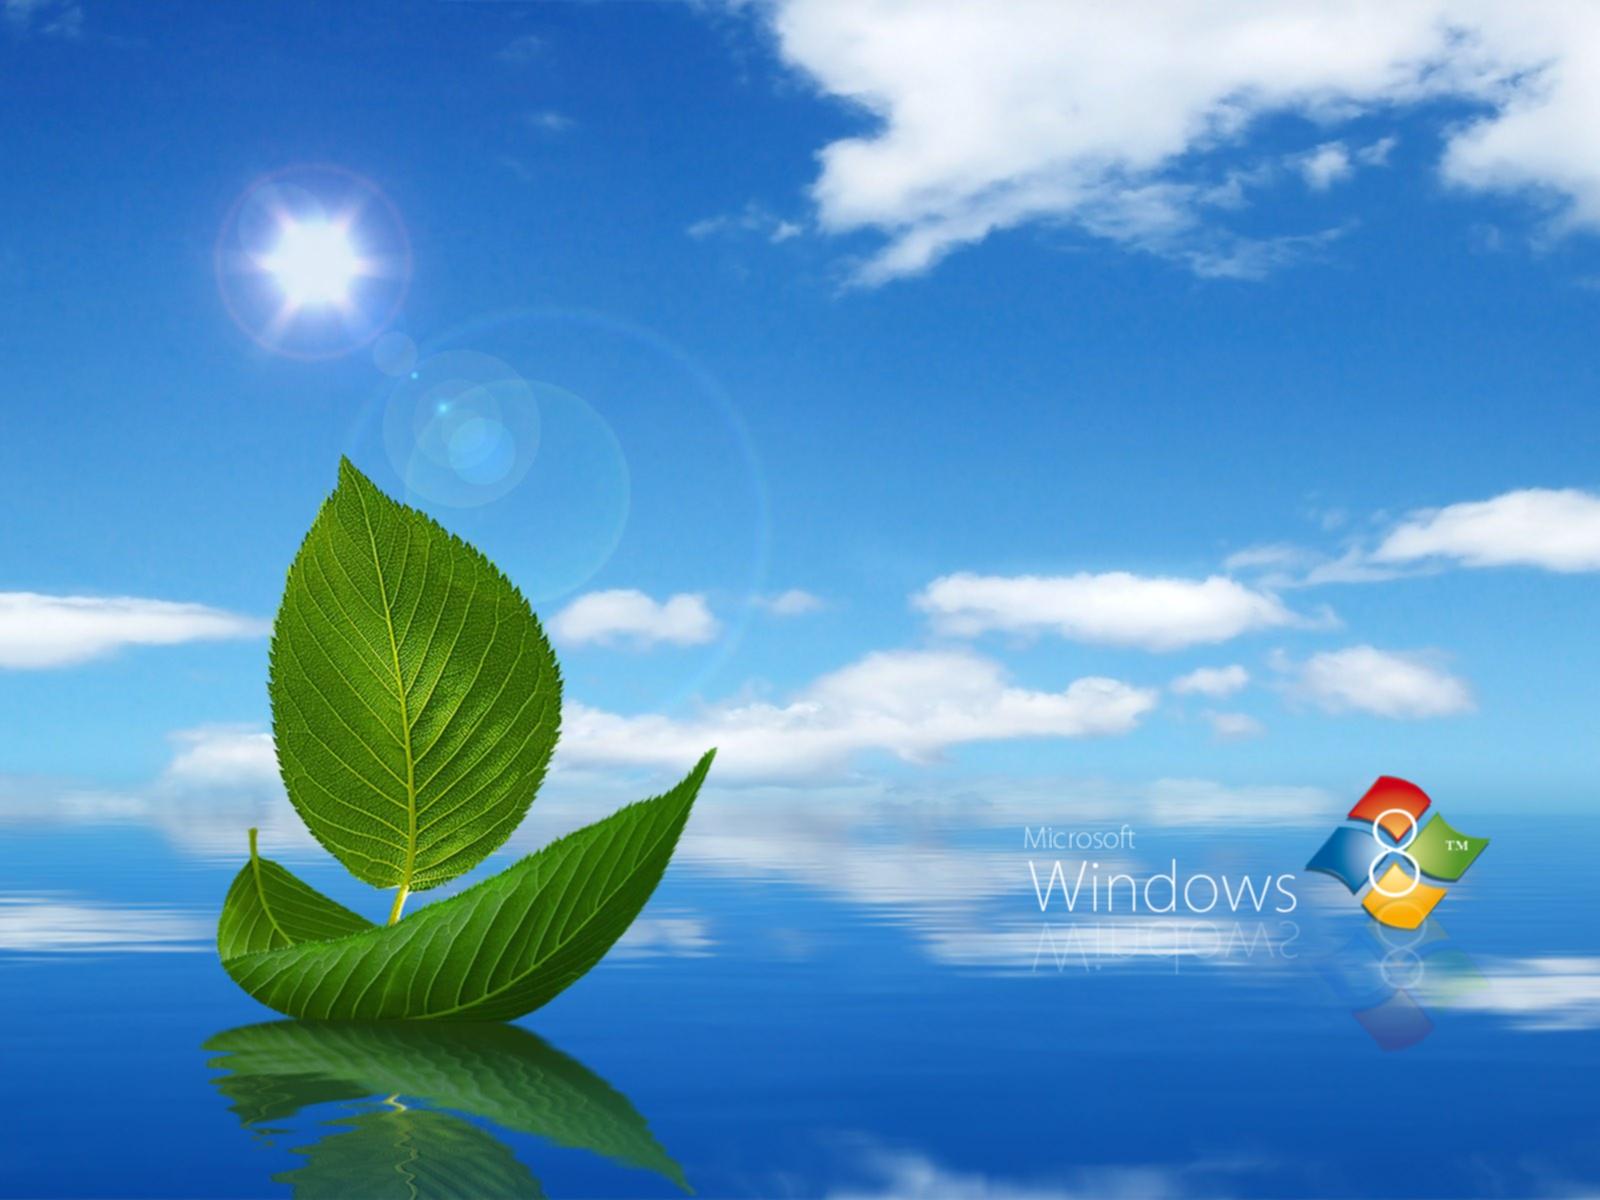 Windows 8 Wallpaper: Fresh Windows 8 Wallpaper